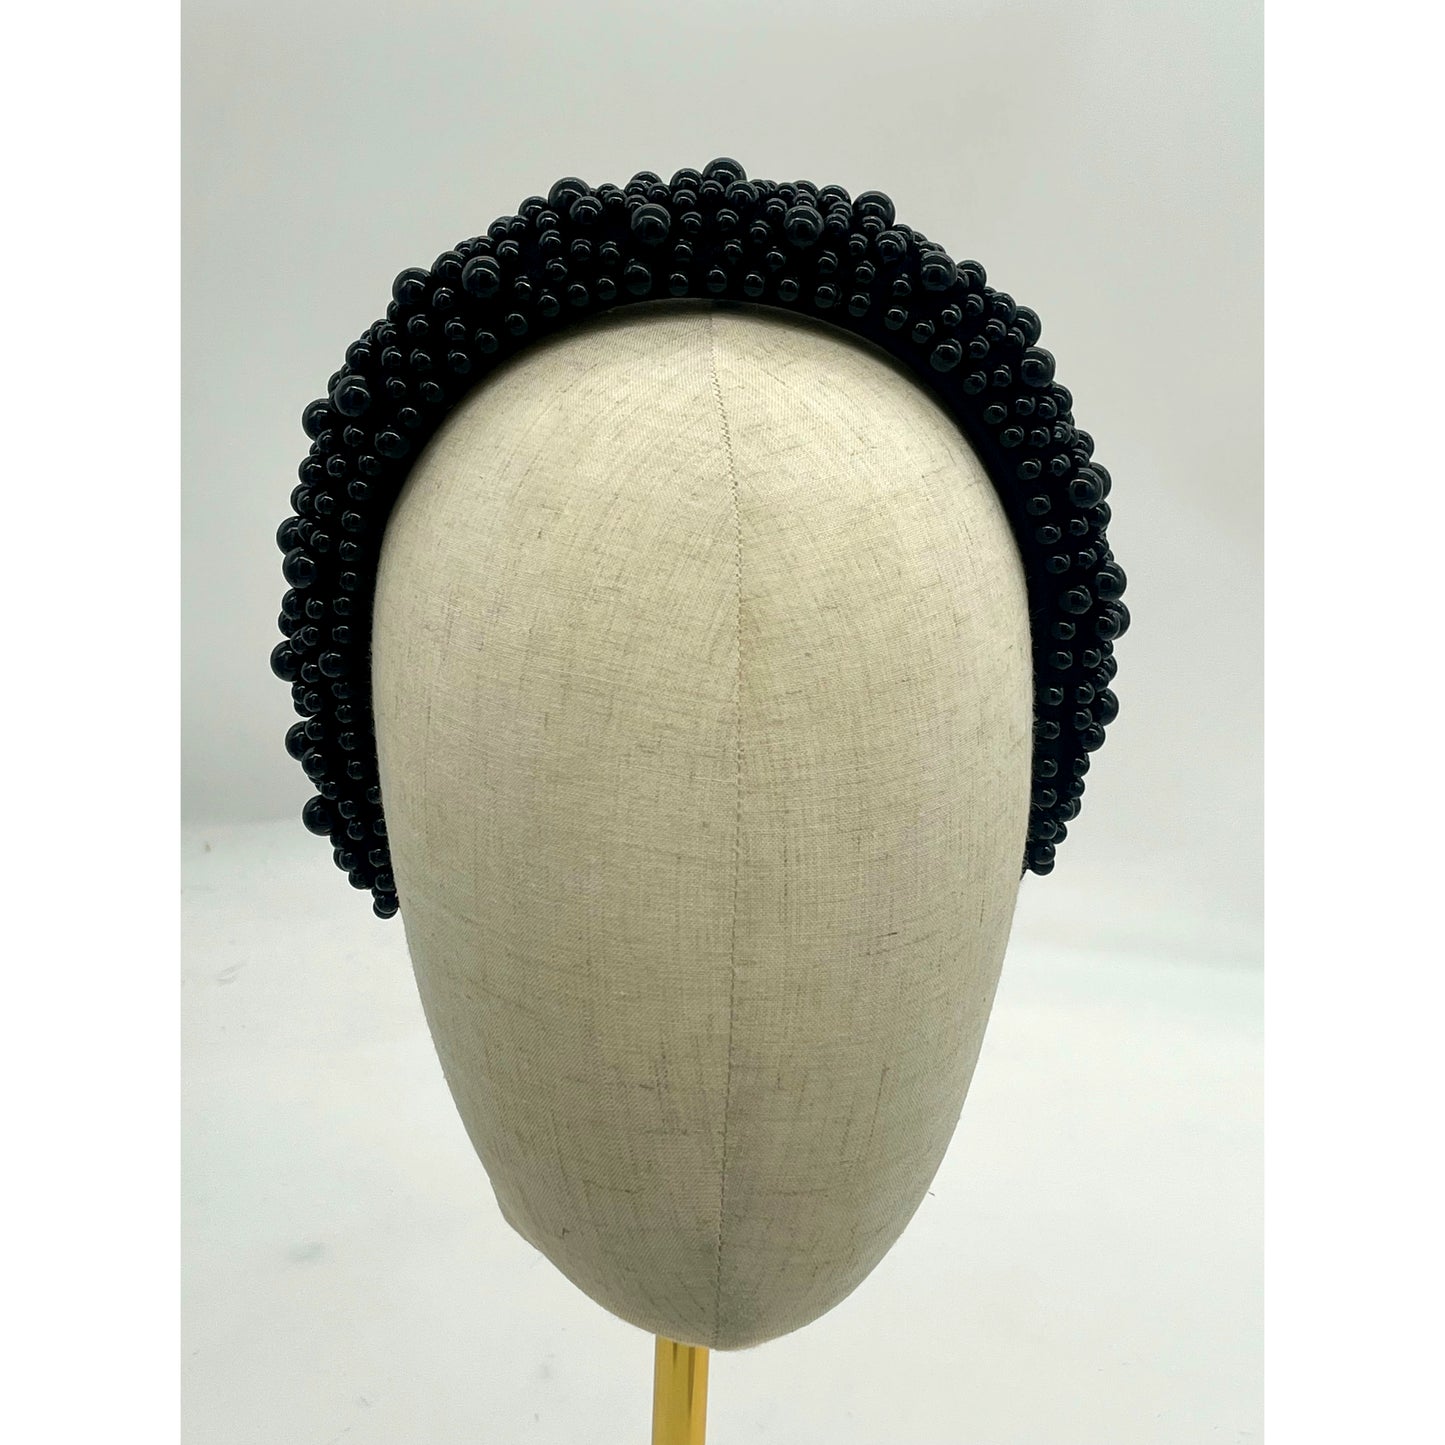 Black pearl headband